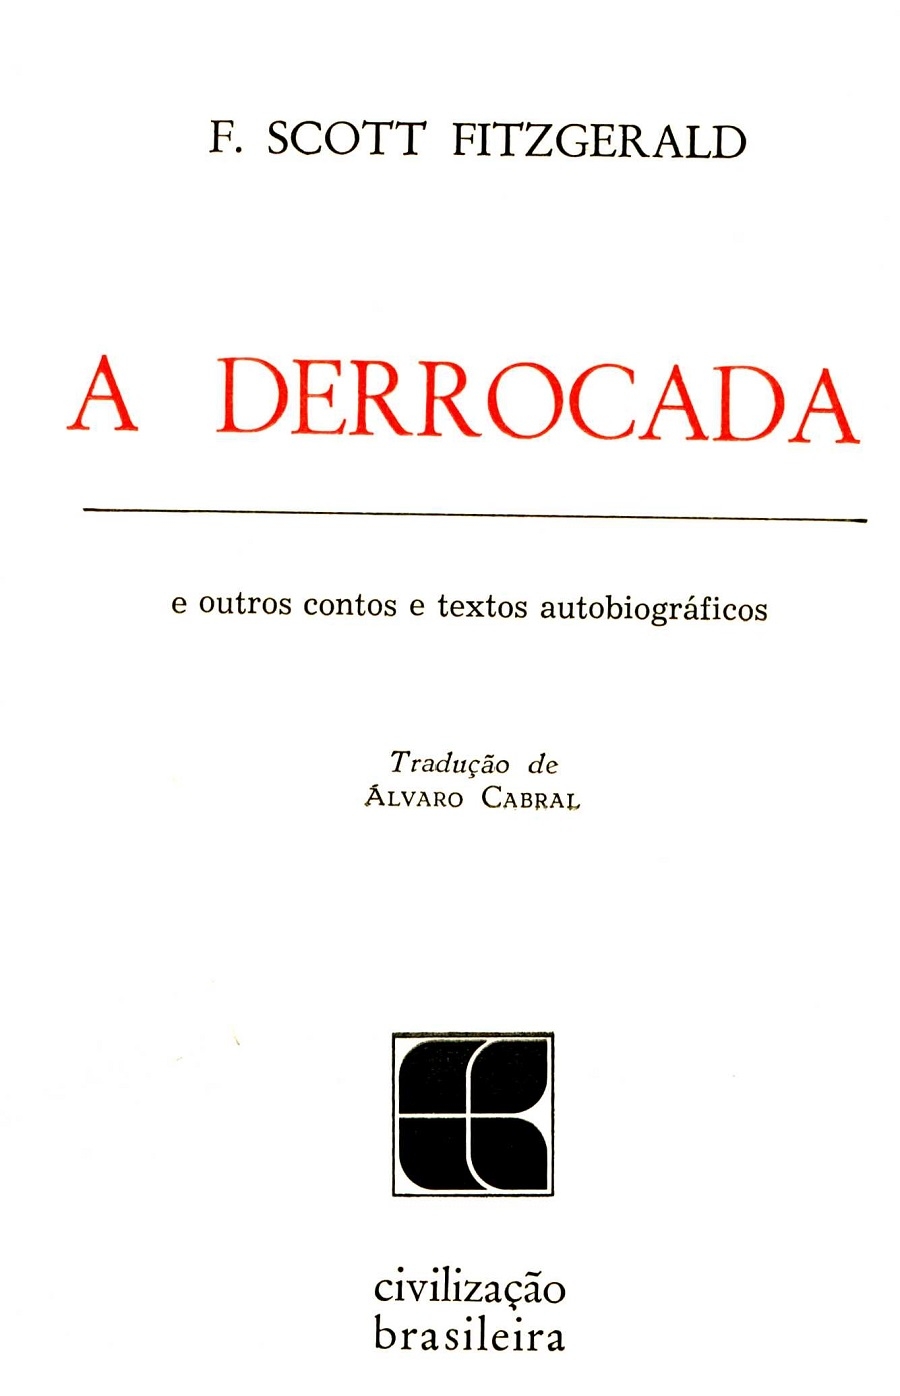 BÁBI IAR: ROMANCE - DOCUMENTARIO SÔBRE OS HORRORES DO NAZISMO by Kuznetsov,  Anatolii Petrovich: Hardcover (1969)